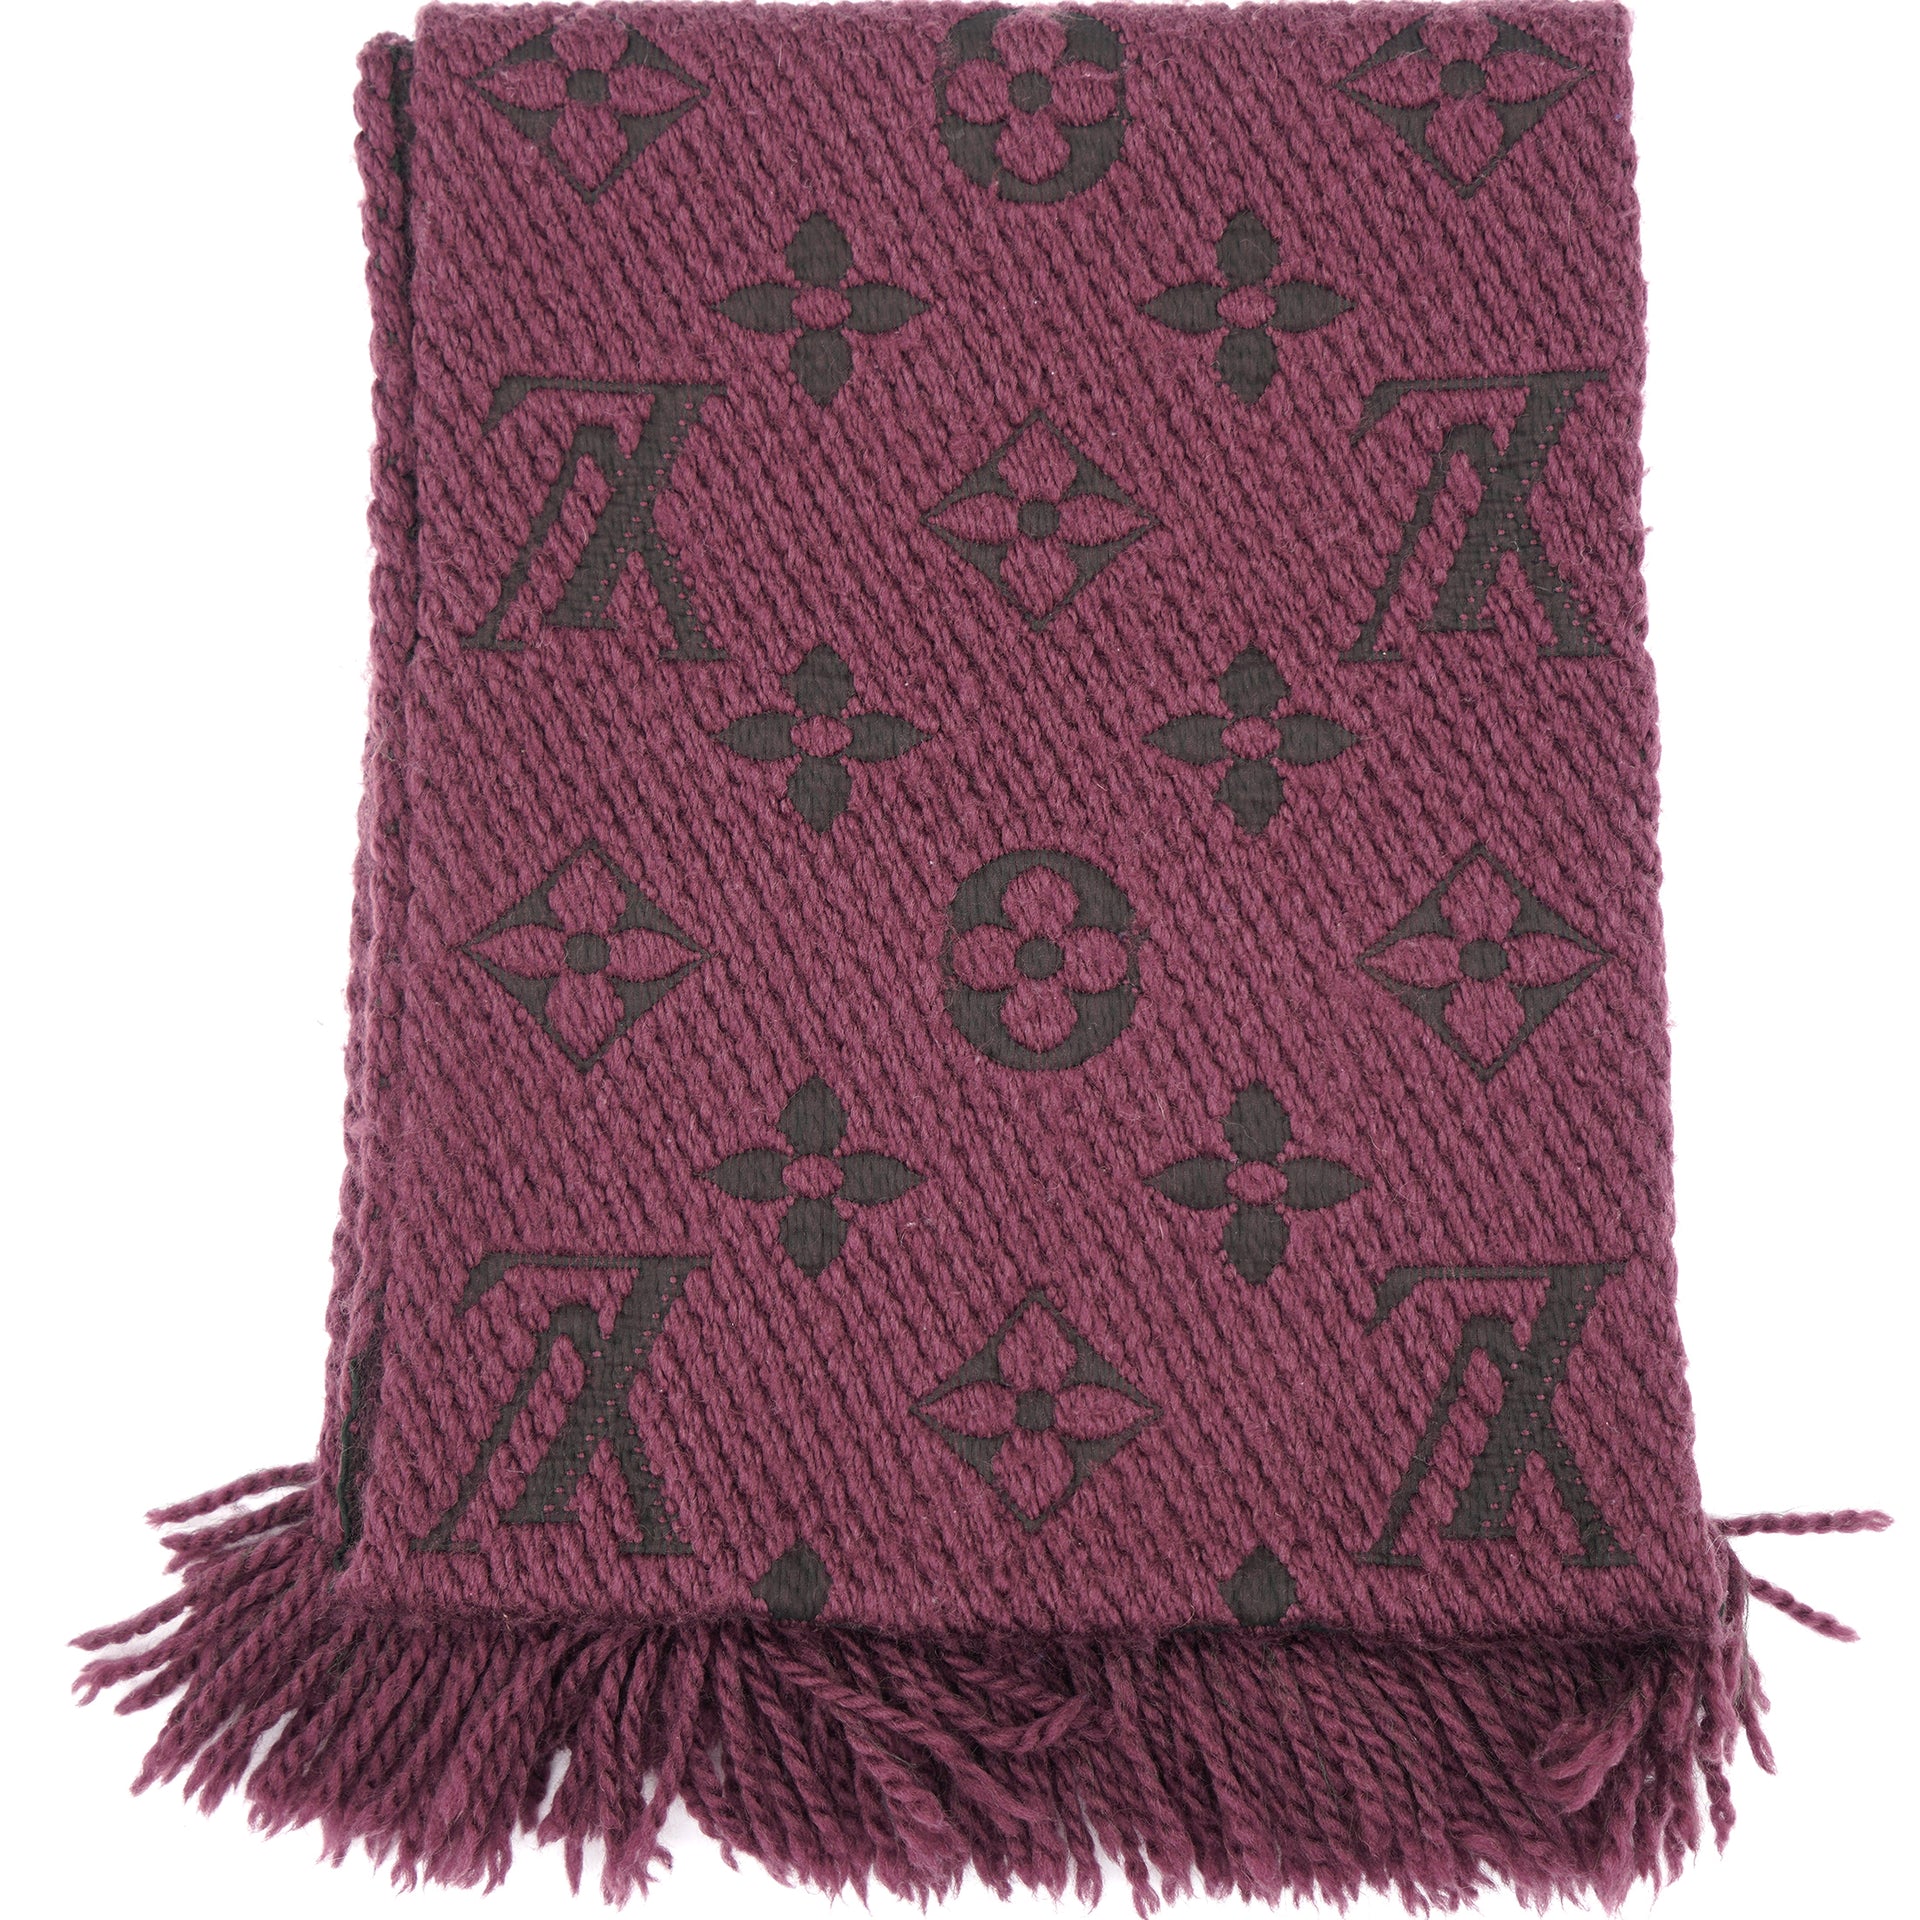 AUTH! Louis Vuitton Damier Checkered 100% Wool Scarf